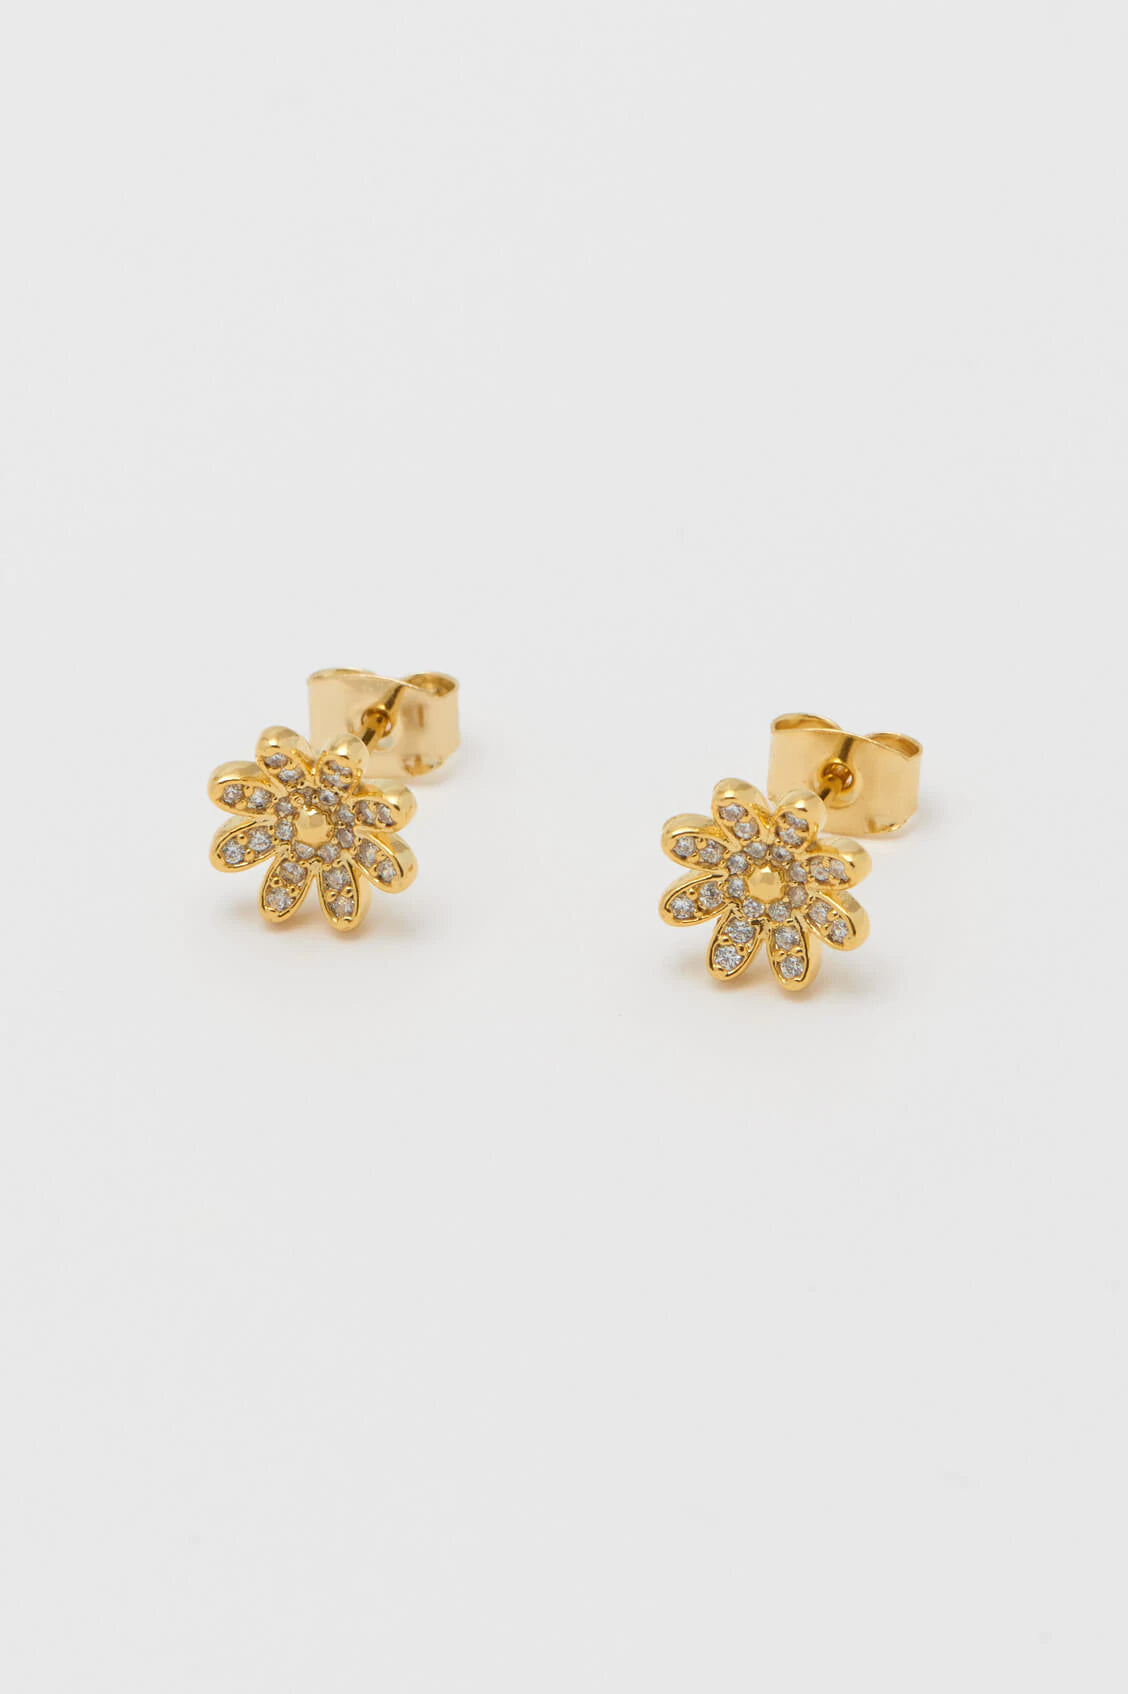 Daisy Wildflower CZ Stud Earrings - Gold Plated